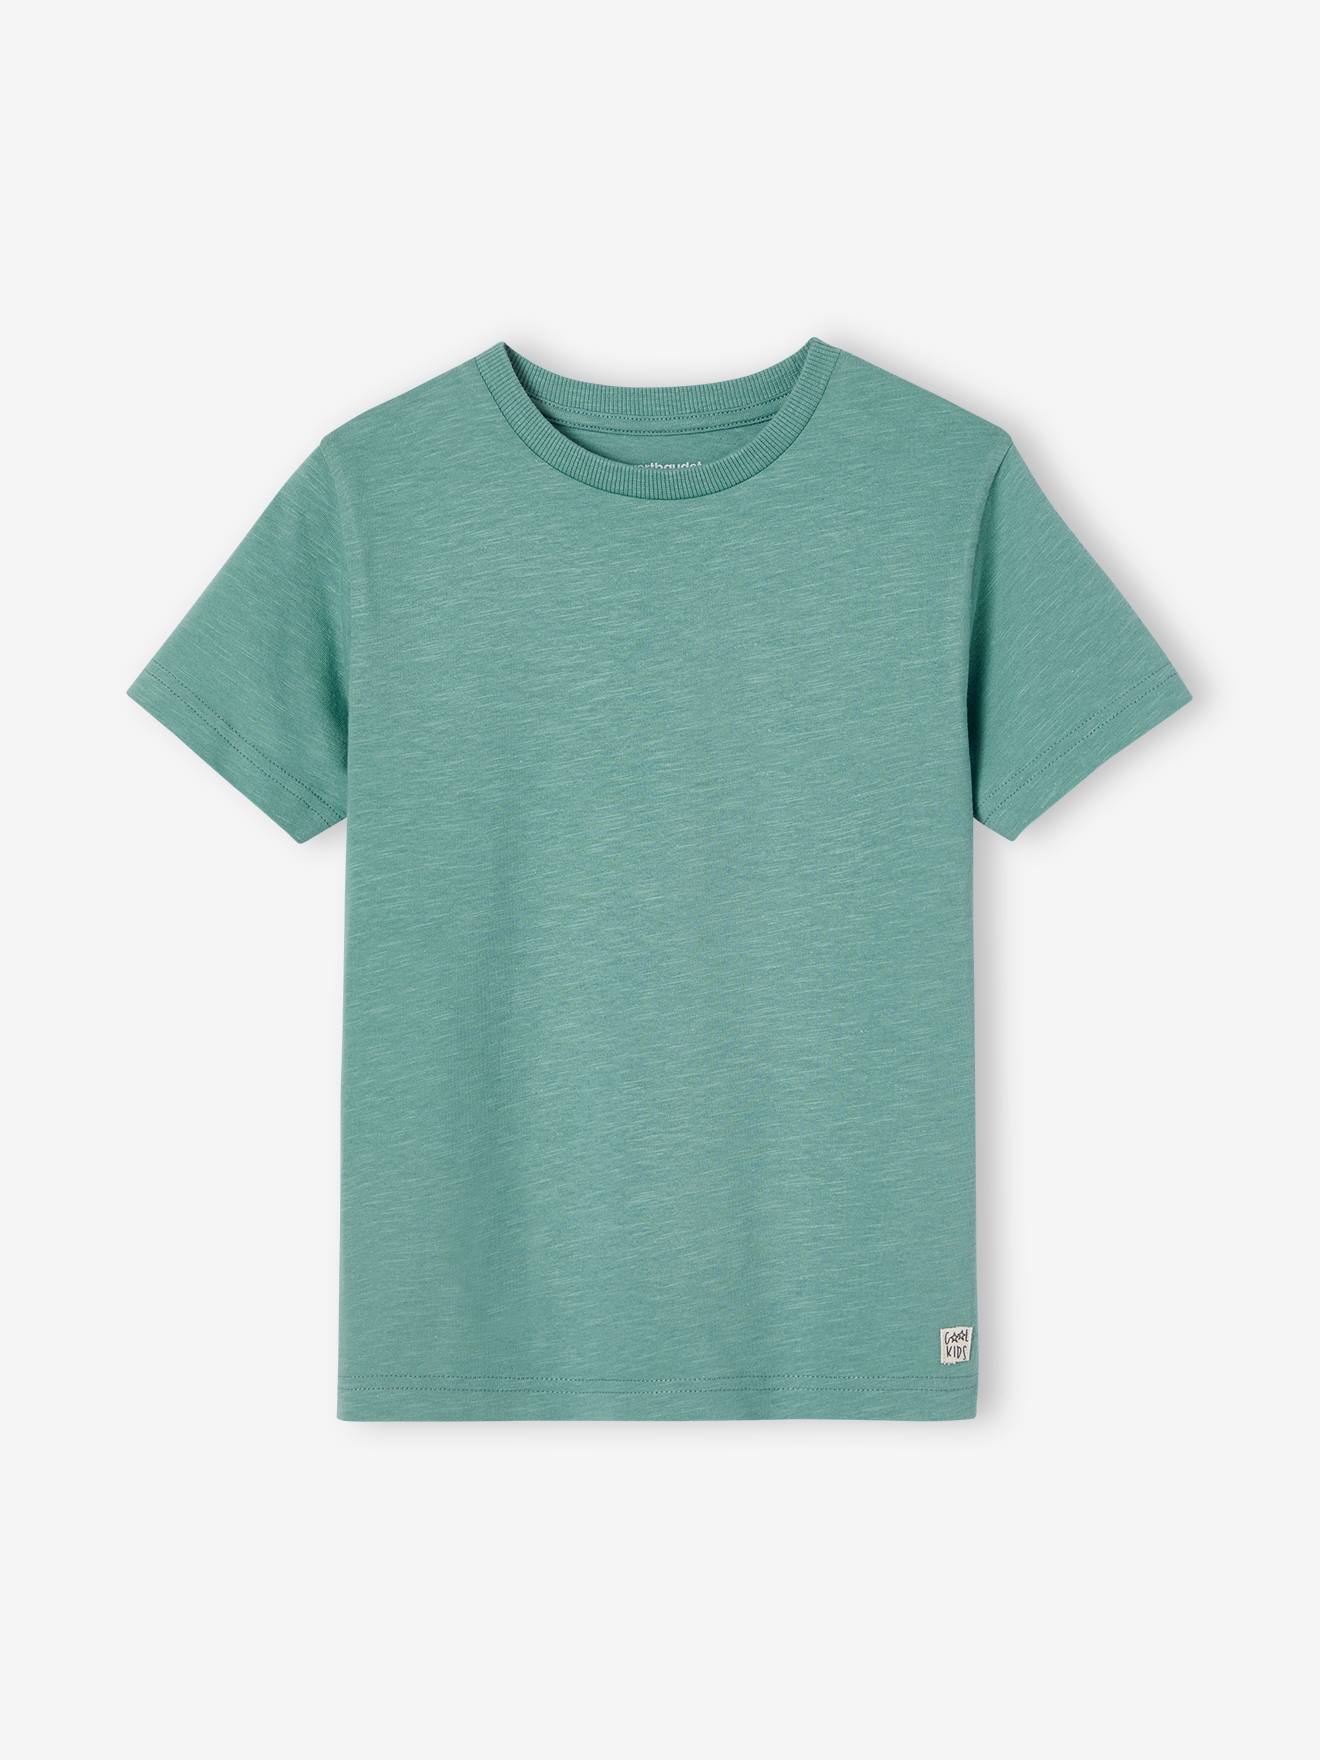 Short Sleeve T-Shirt, for Boys green